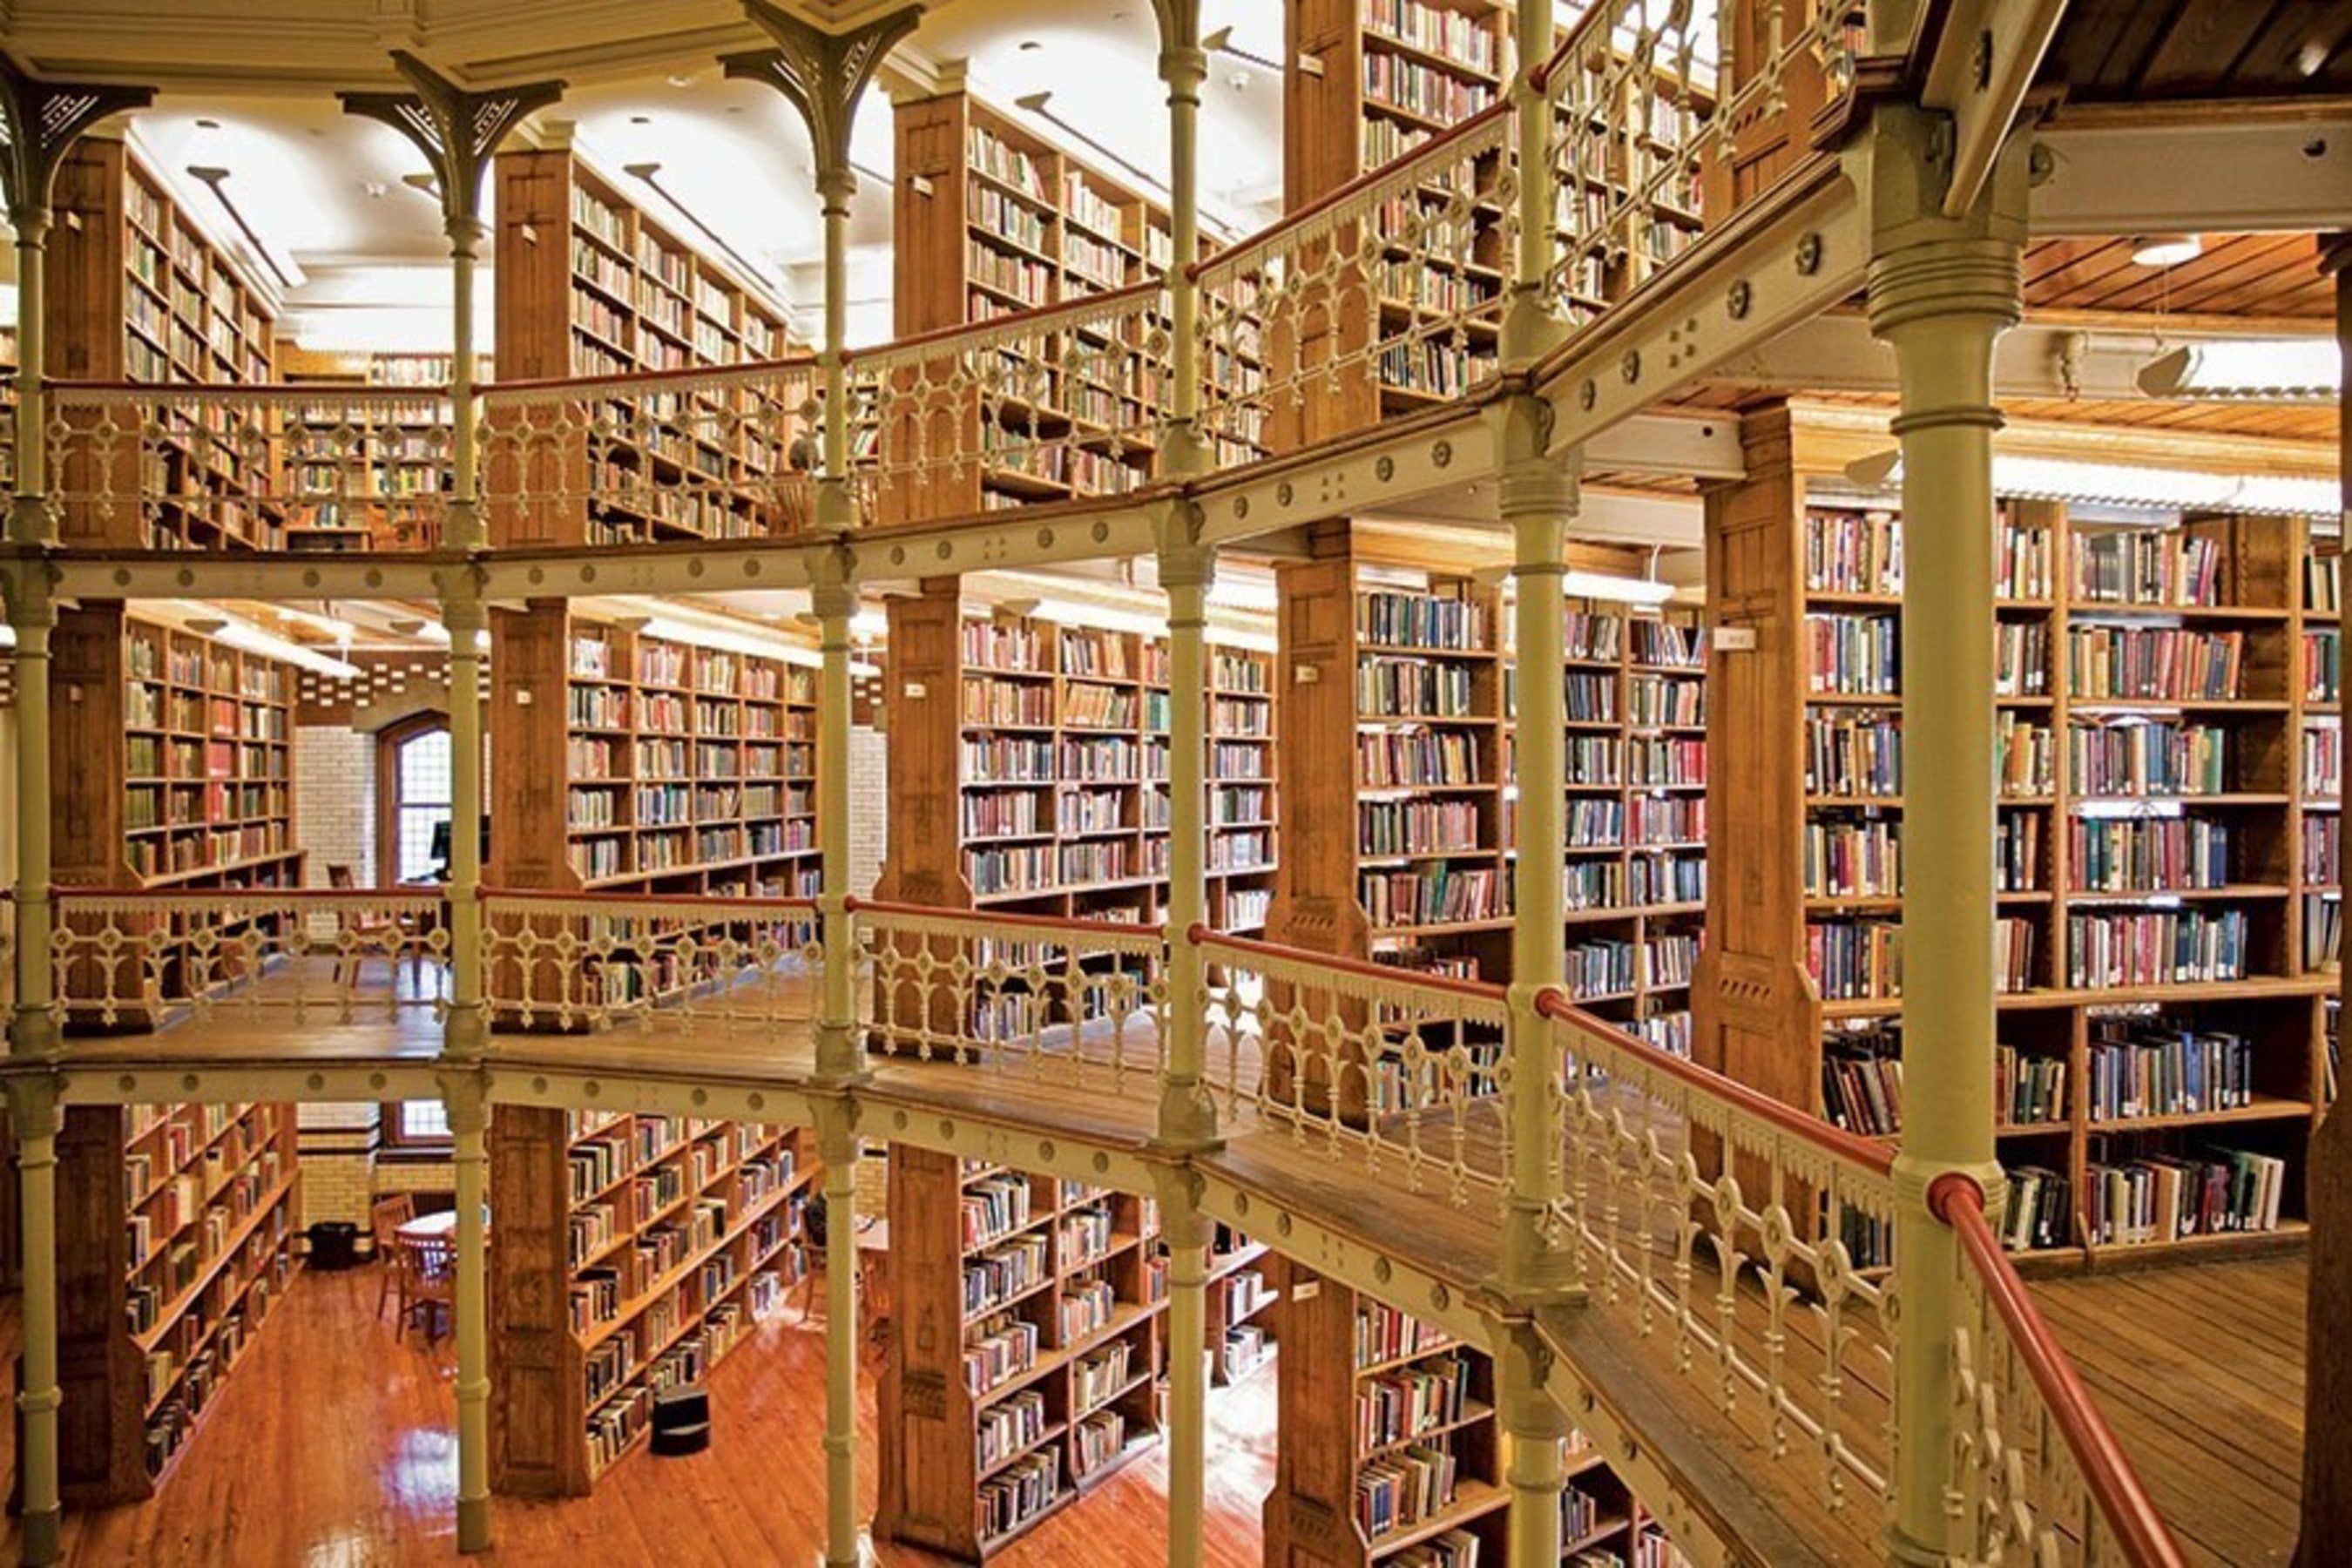 Library rld. Библиотека Чикагского университета. Пенсильванский университет библиотека. Библиотека университета Чикаго. Библиотека «the Angel Library» в Киото.